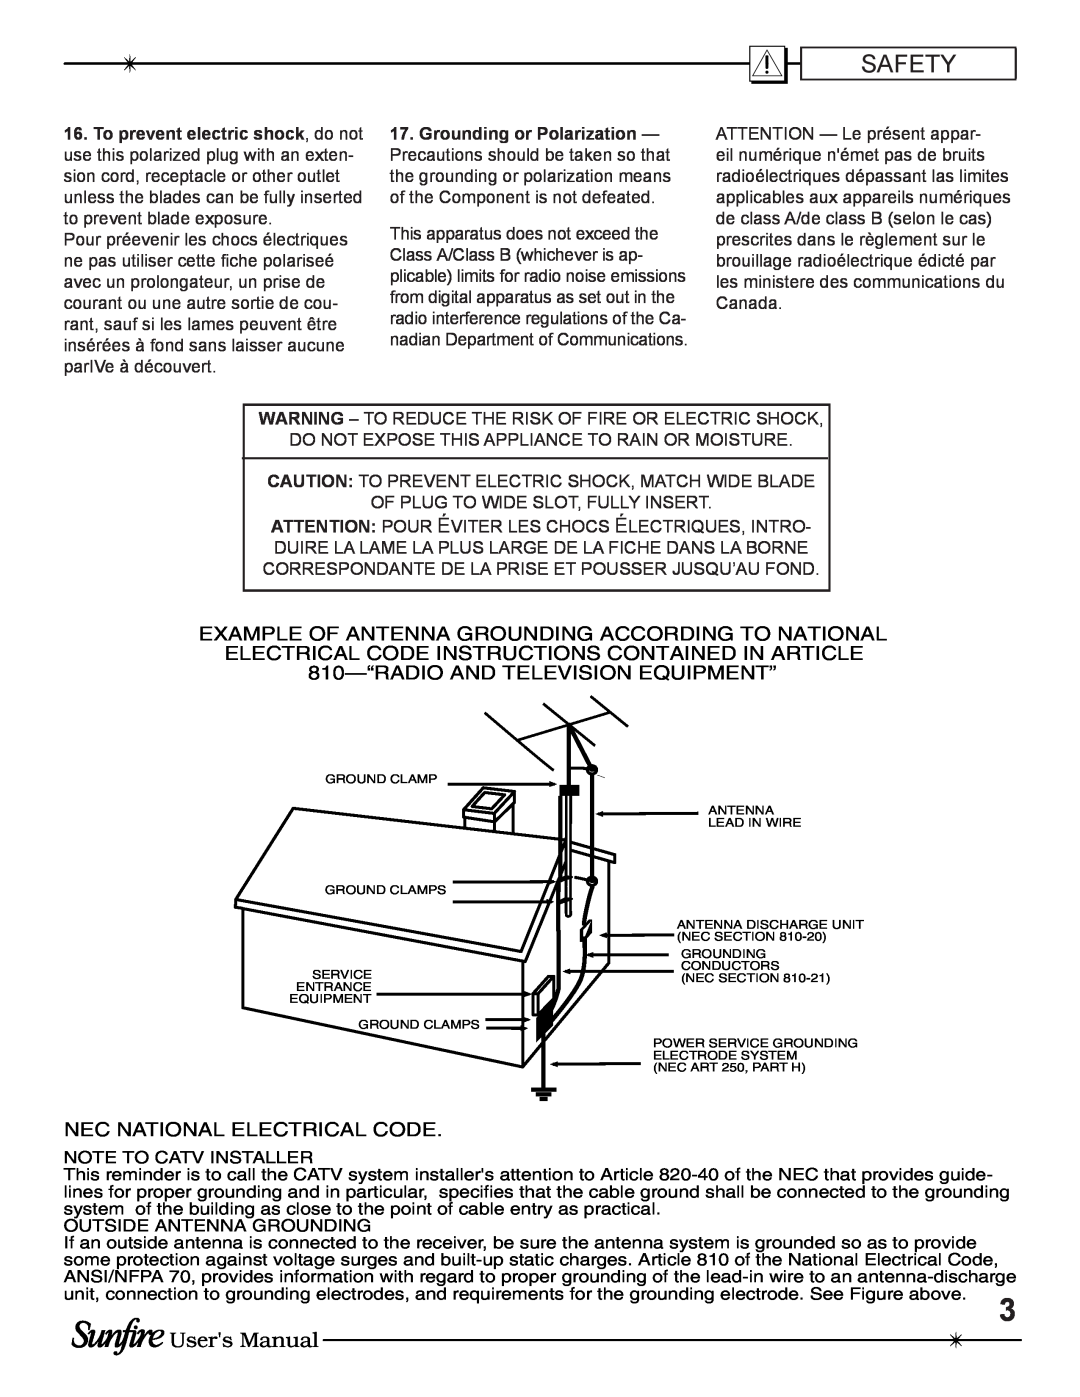 Sunfire TGP-5(E) manual Users Manual, Nec National Electrical Code 